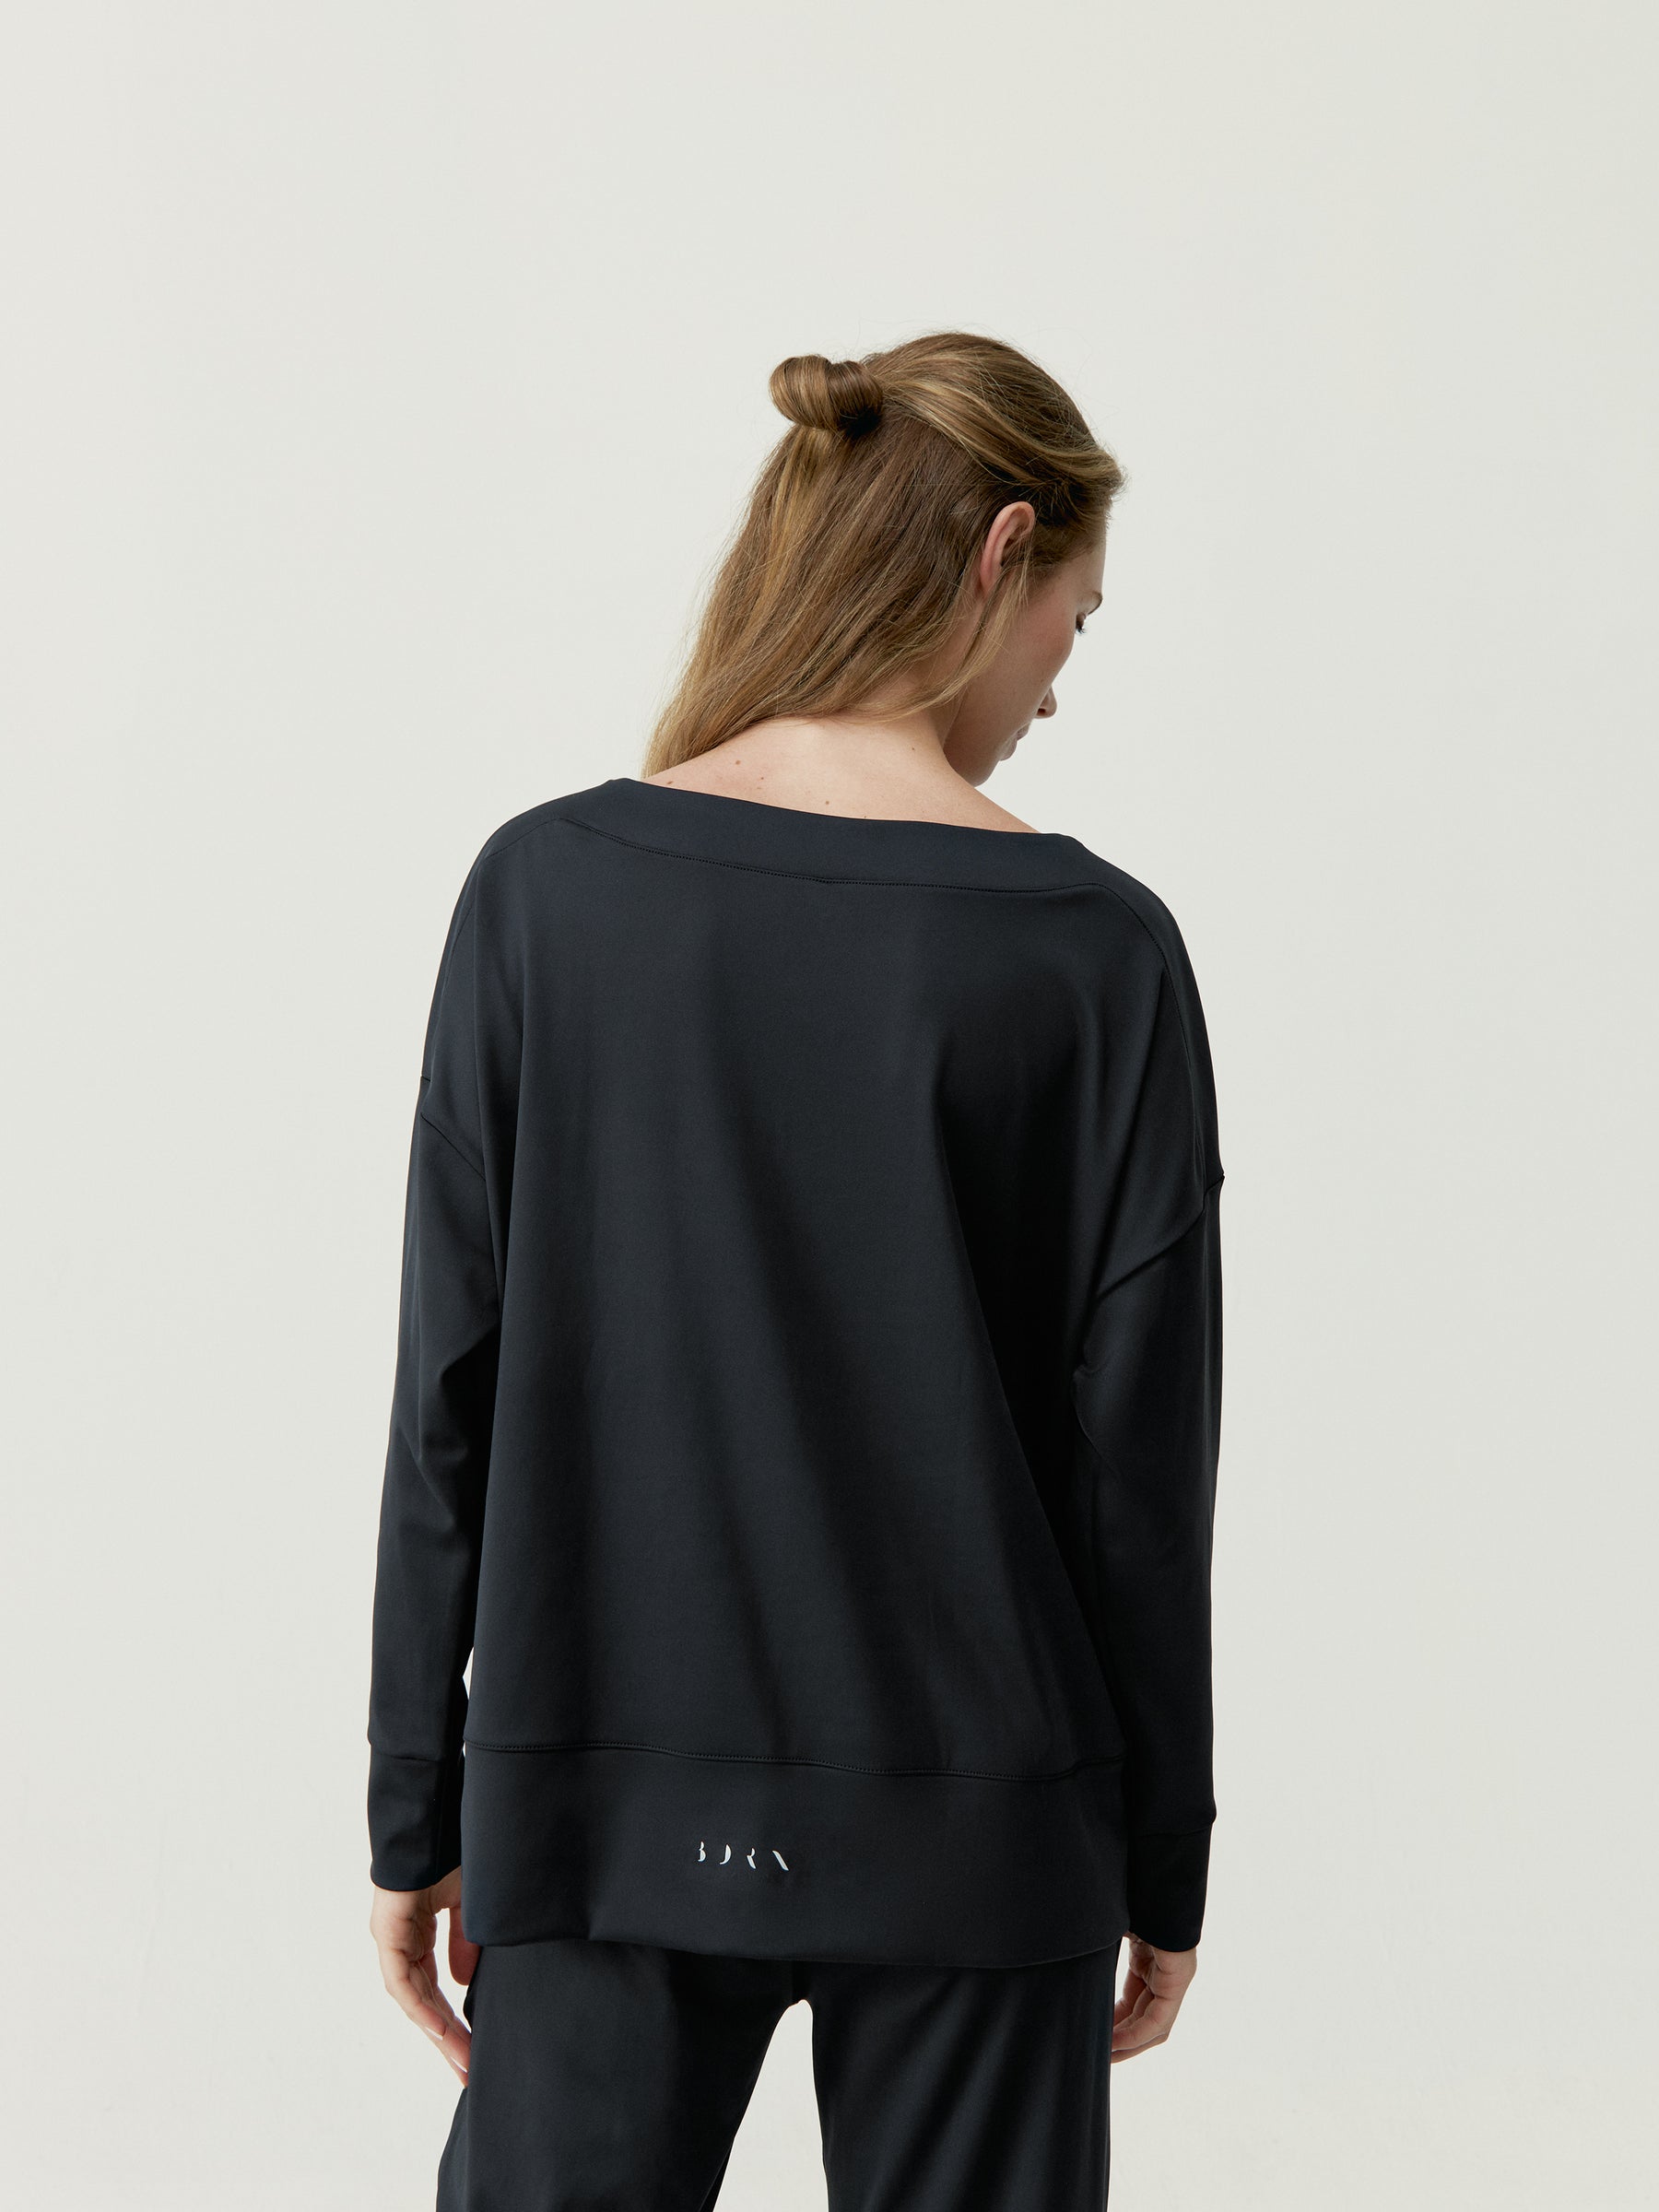 Malik Sweatshirt in Black